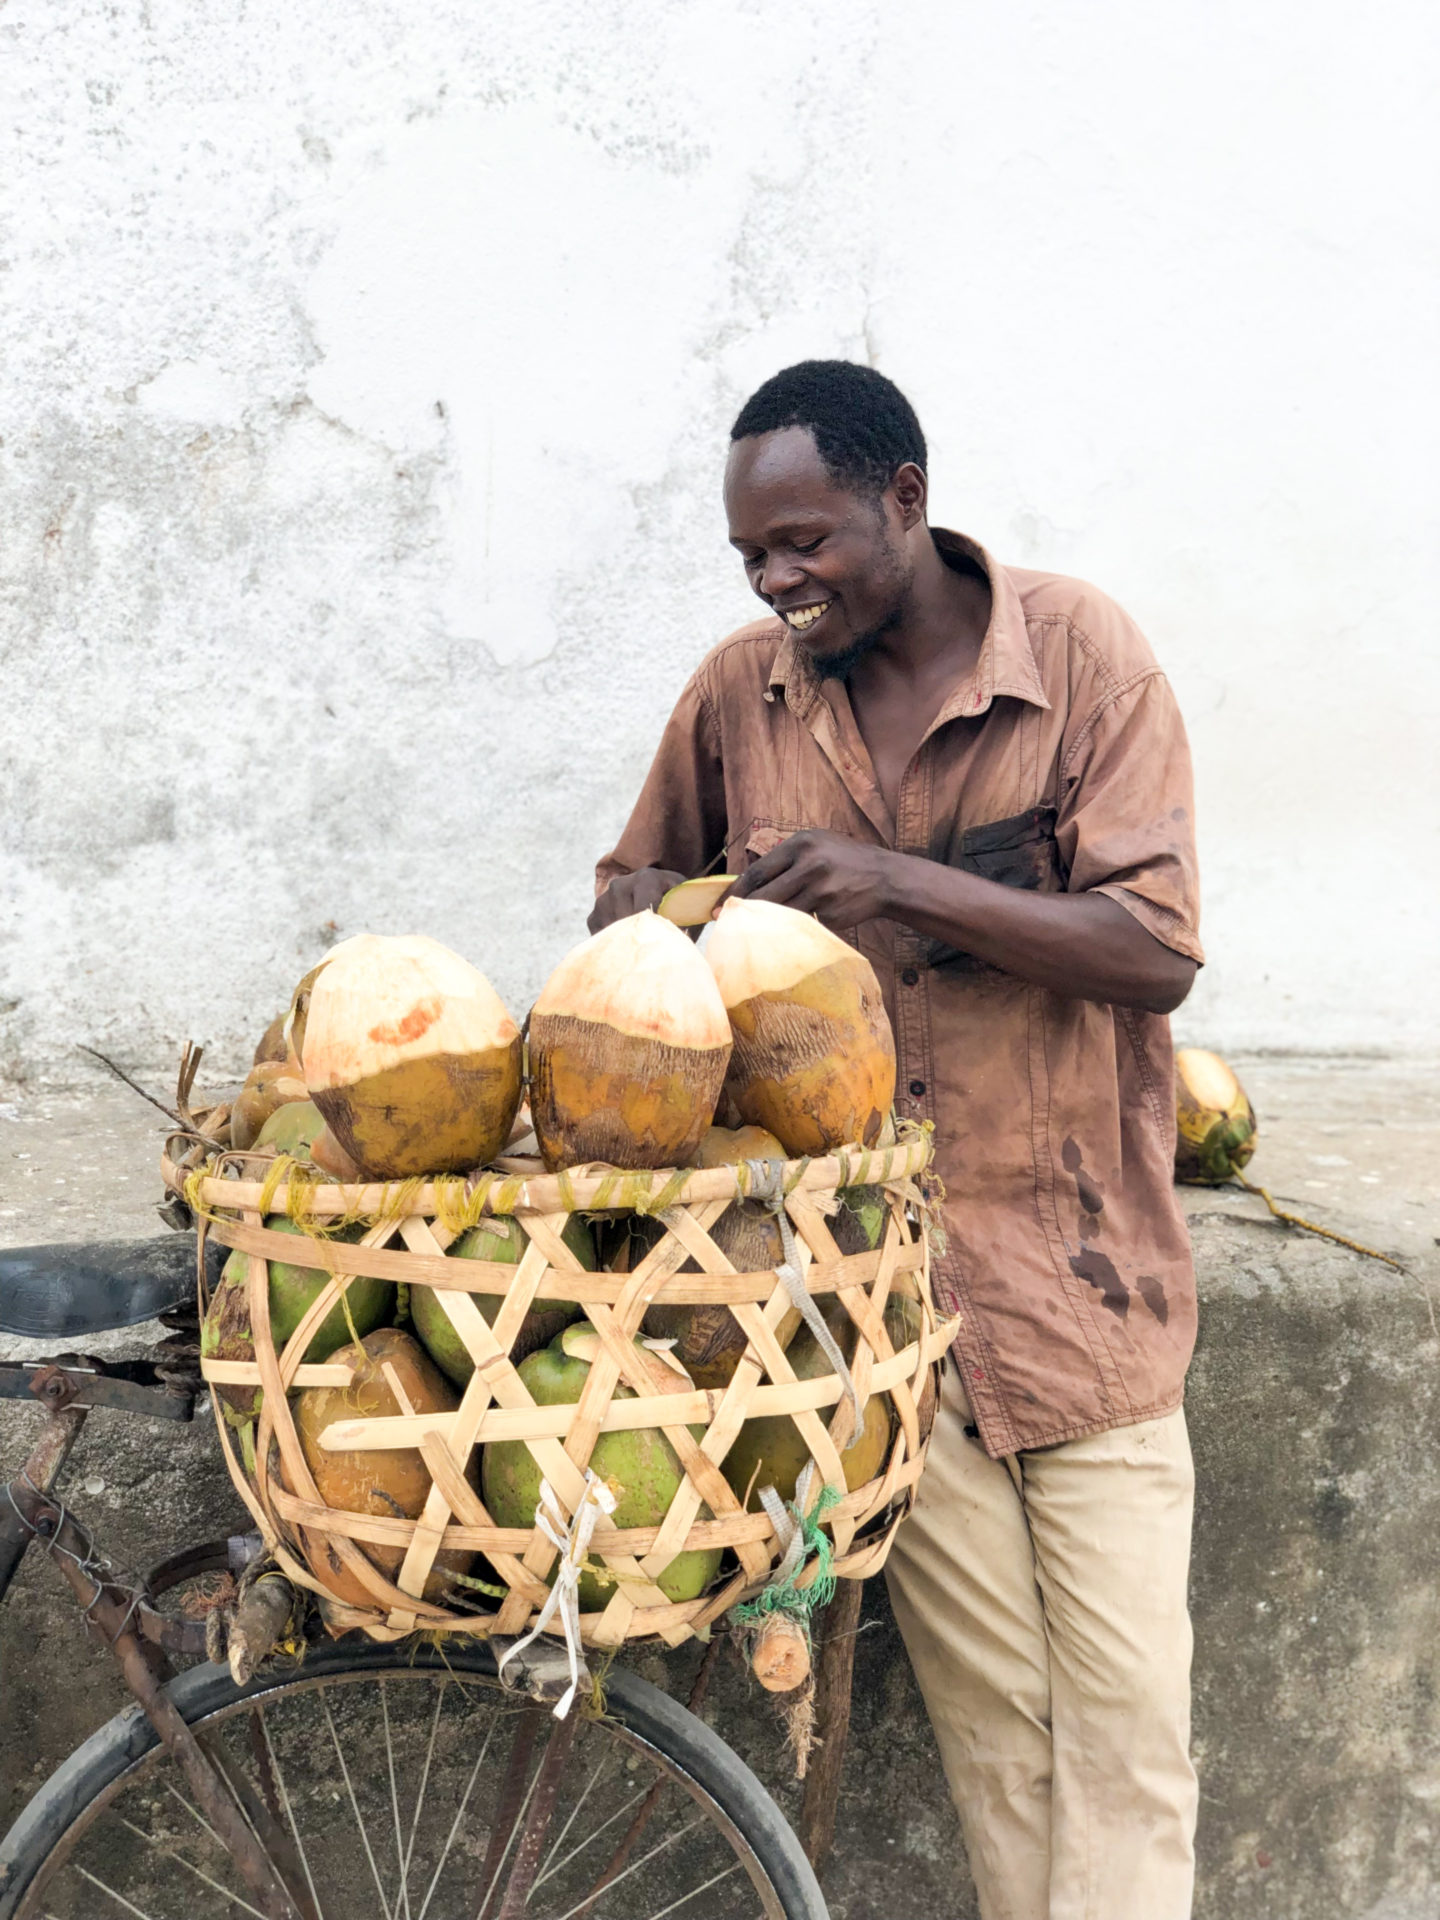 Zanzibar travel guide - stone town coconut seller